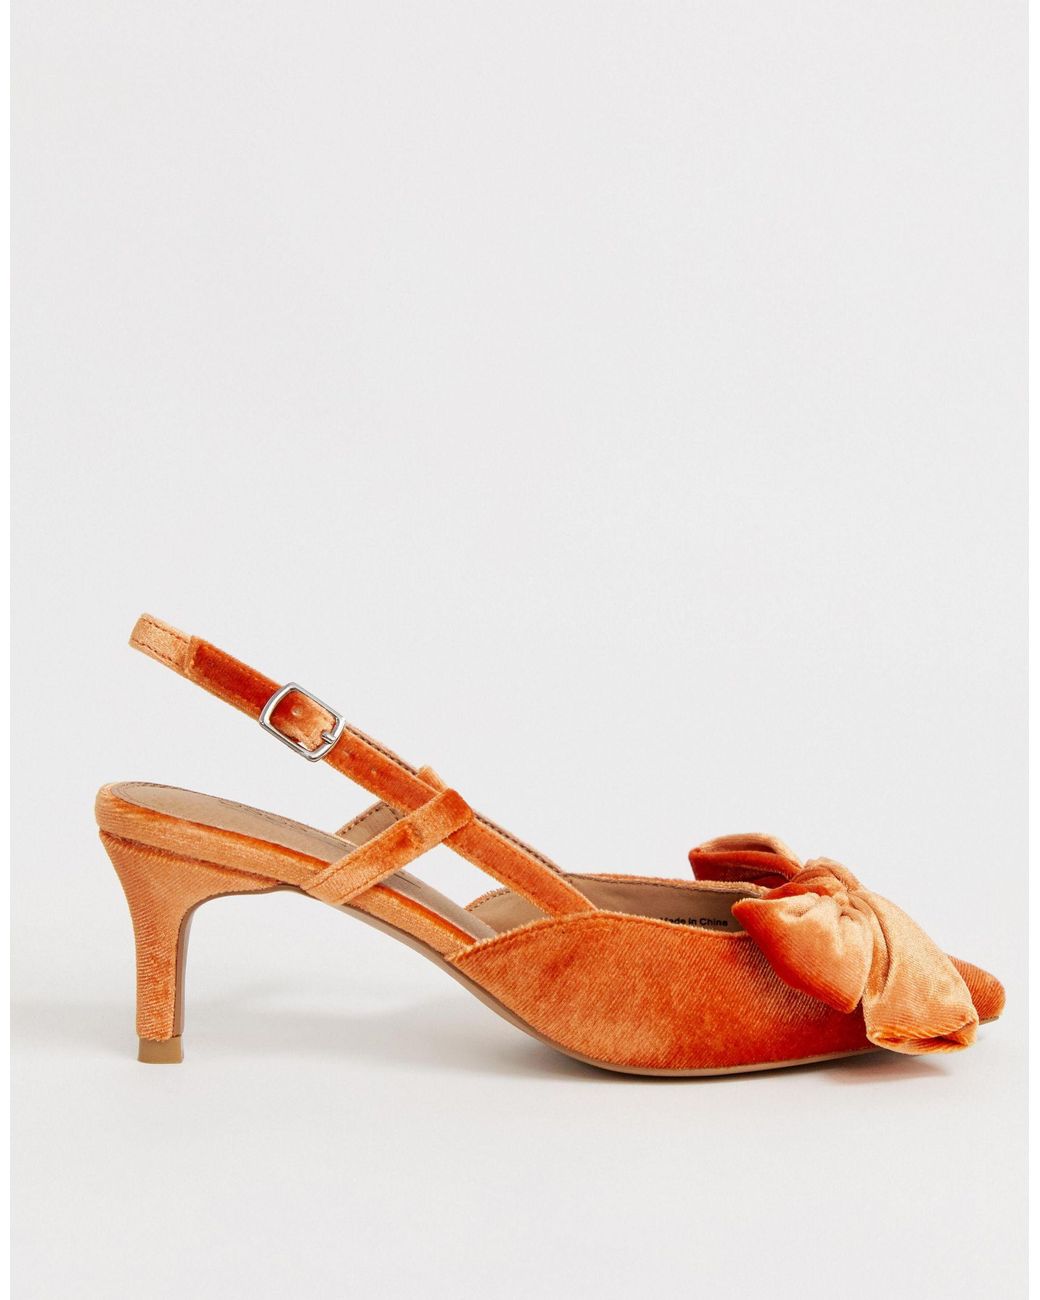 Bonnibel Peep Toe Platform Heels Size 6 Black Orange | eBay